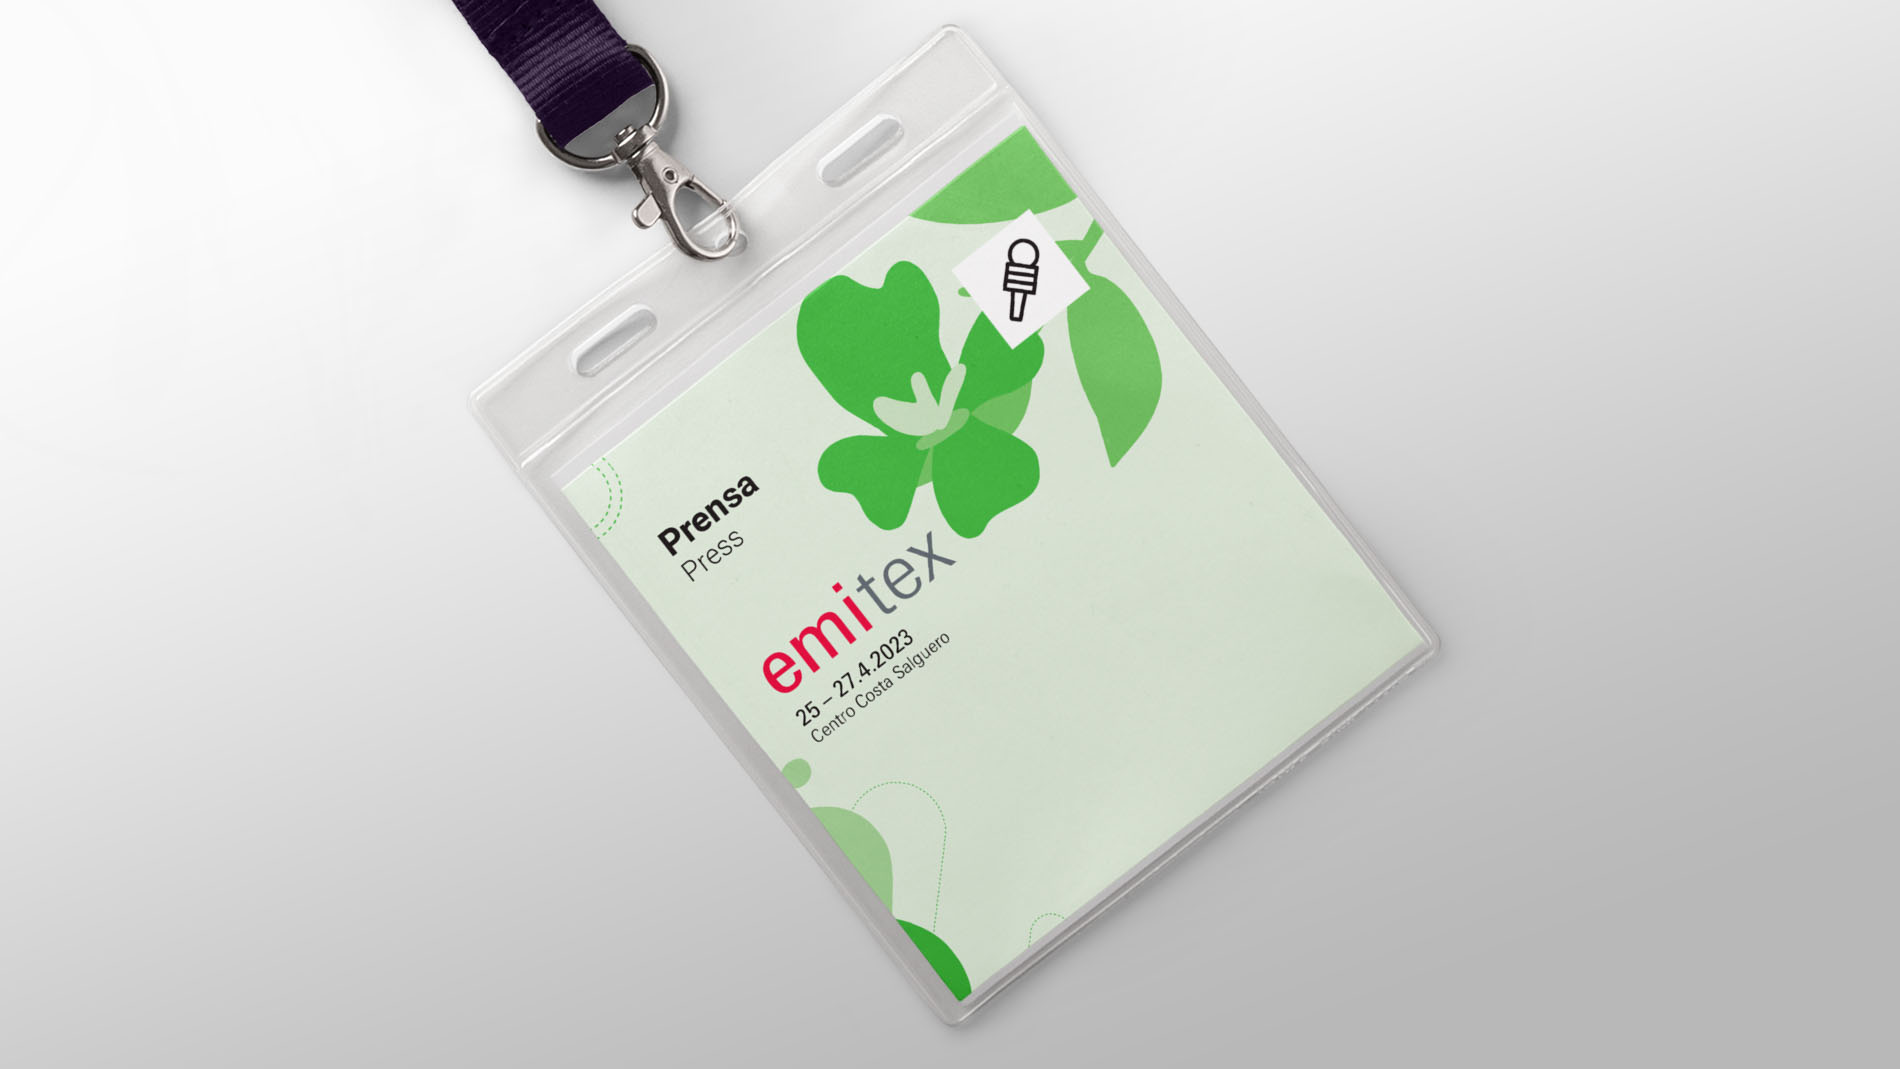 Emitex - Credencial prensa